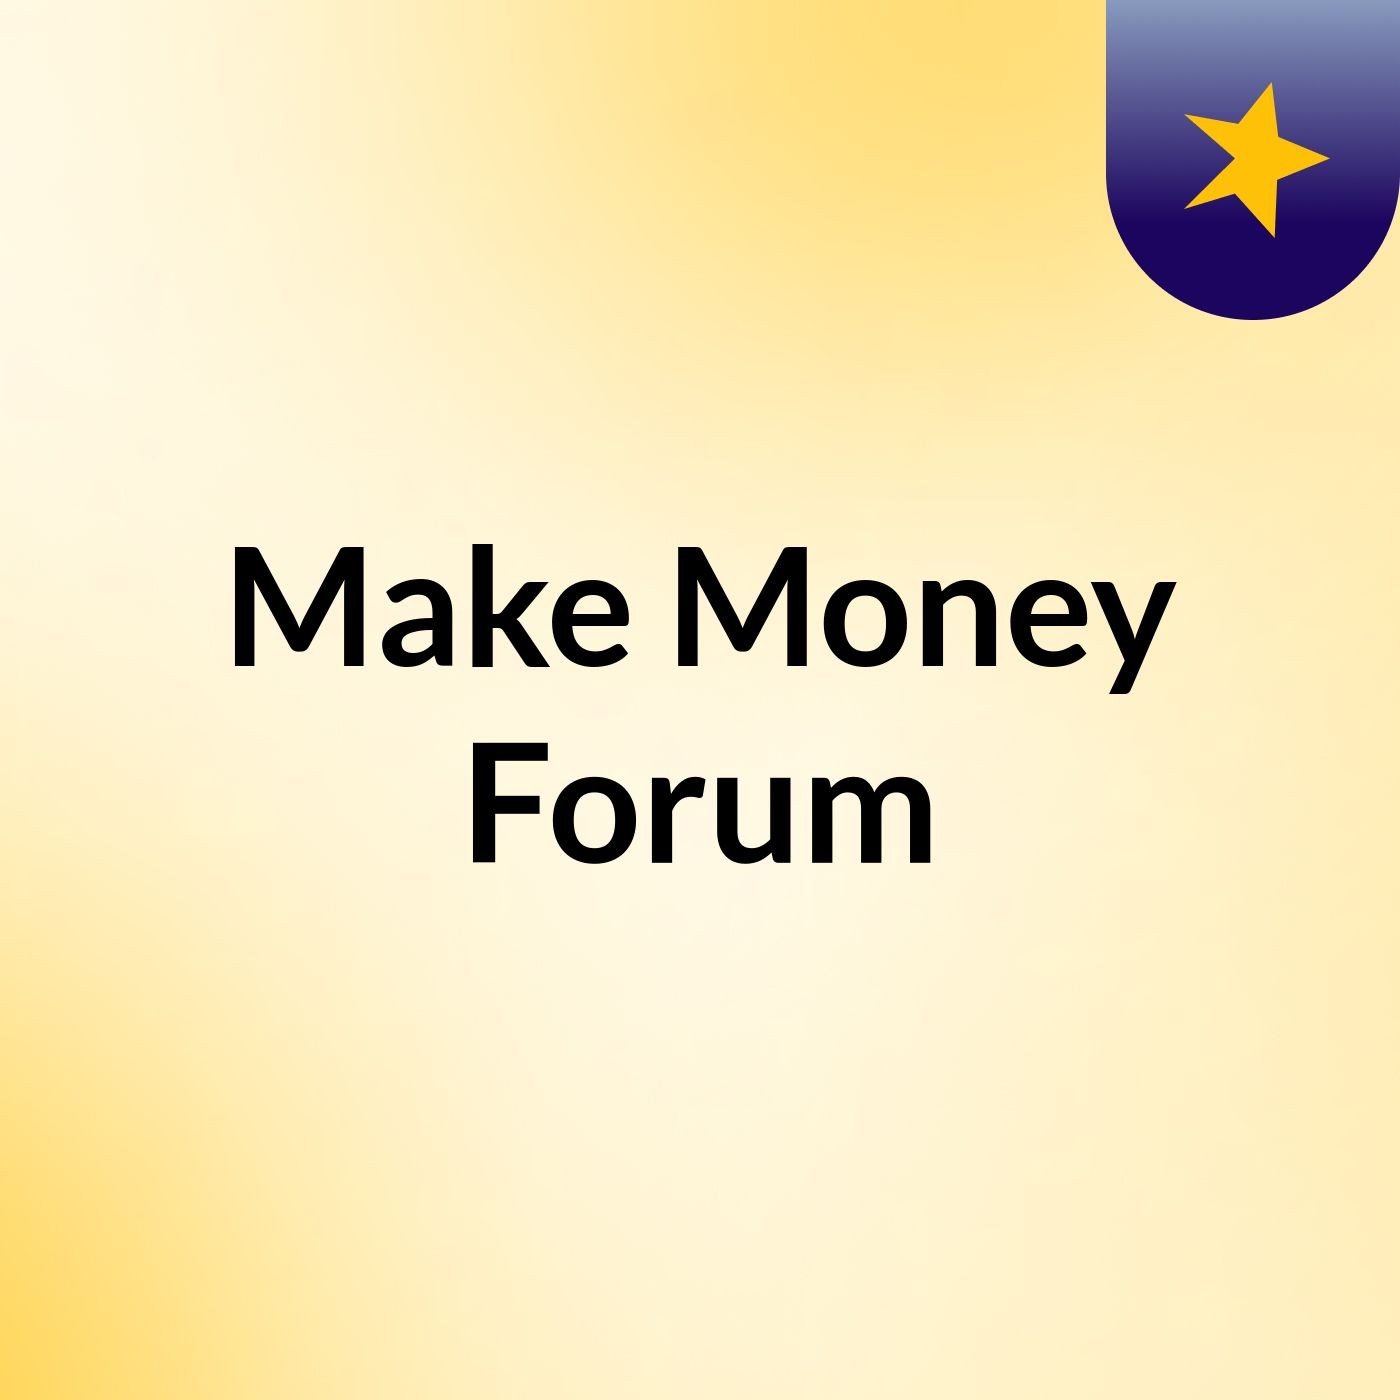 Make Money Forum